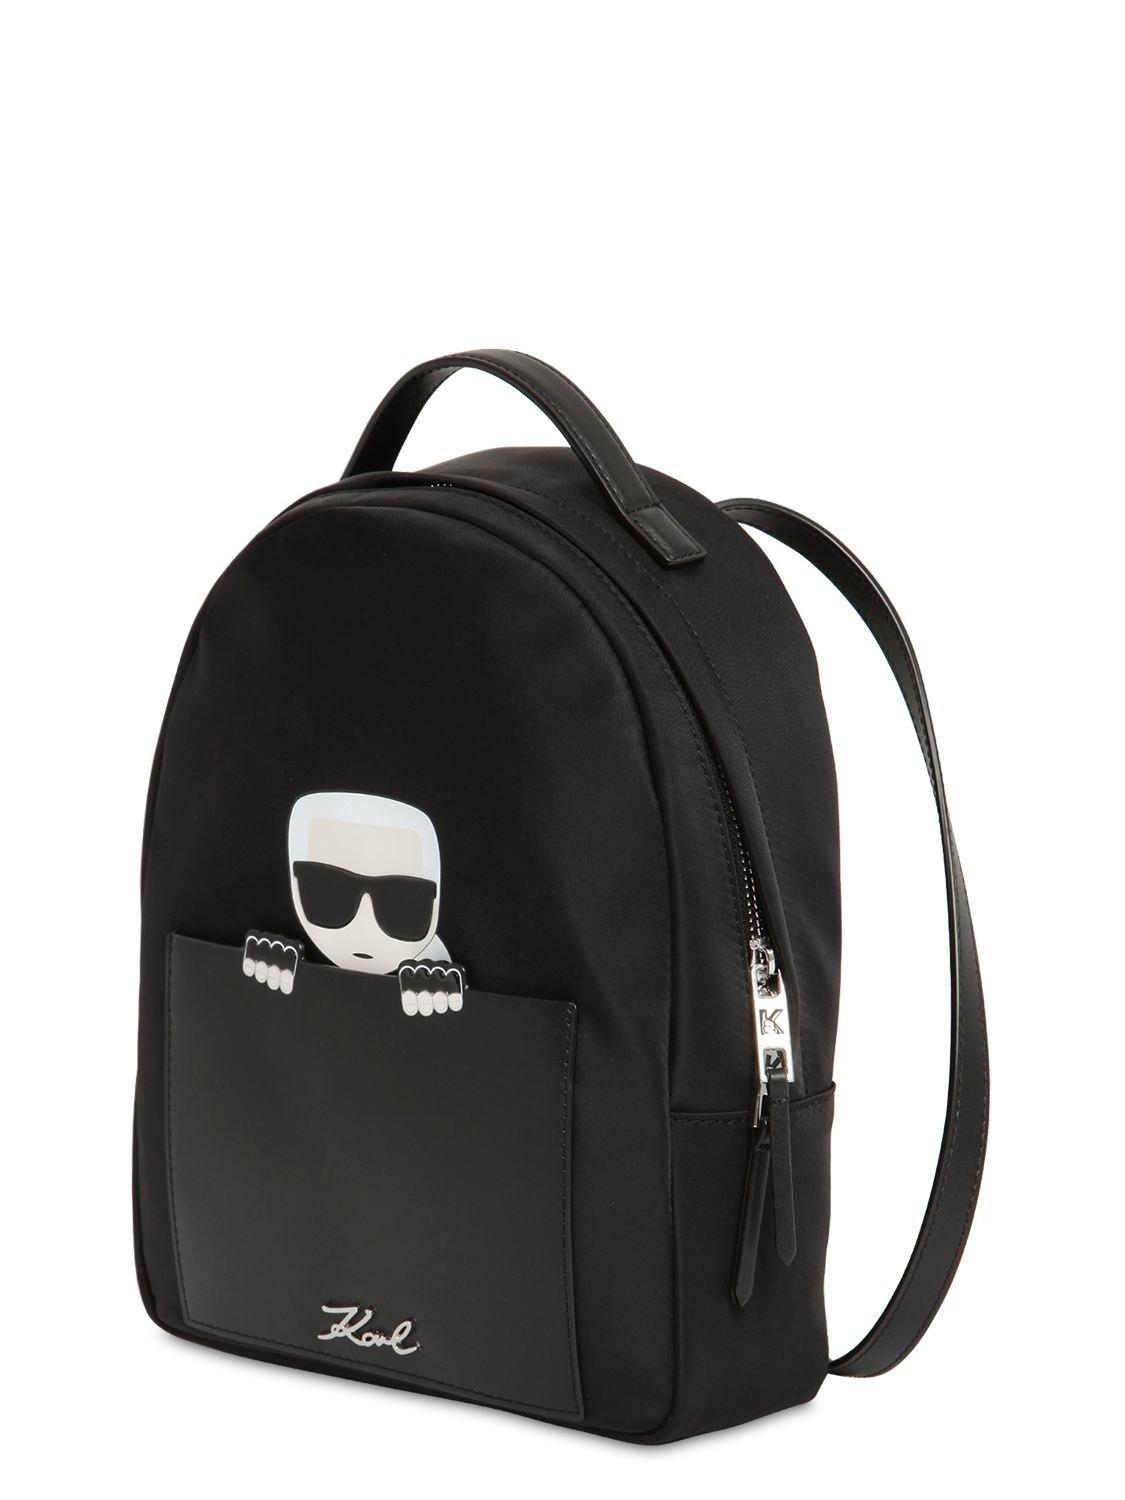 Karl Lagerfeld Small Karl Ikonik Nylon Backpack in Black - Lyst